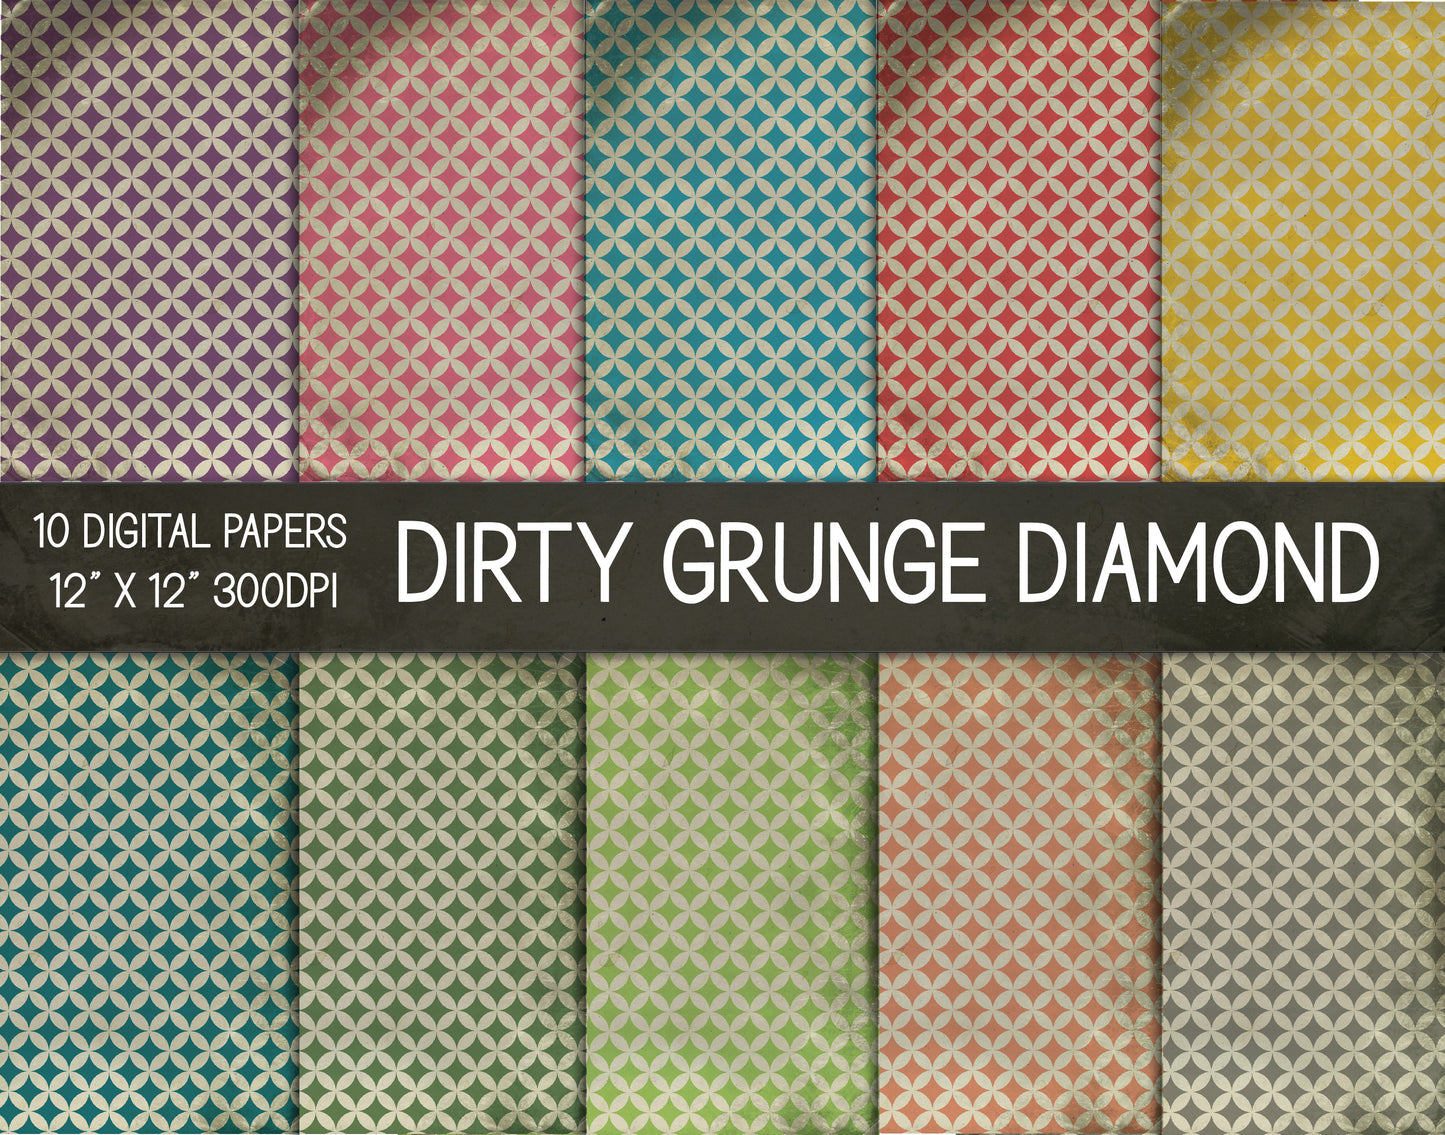 Dirty Grunge Diamond Digital Papers, Grunge Texture Paper